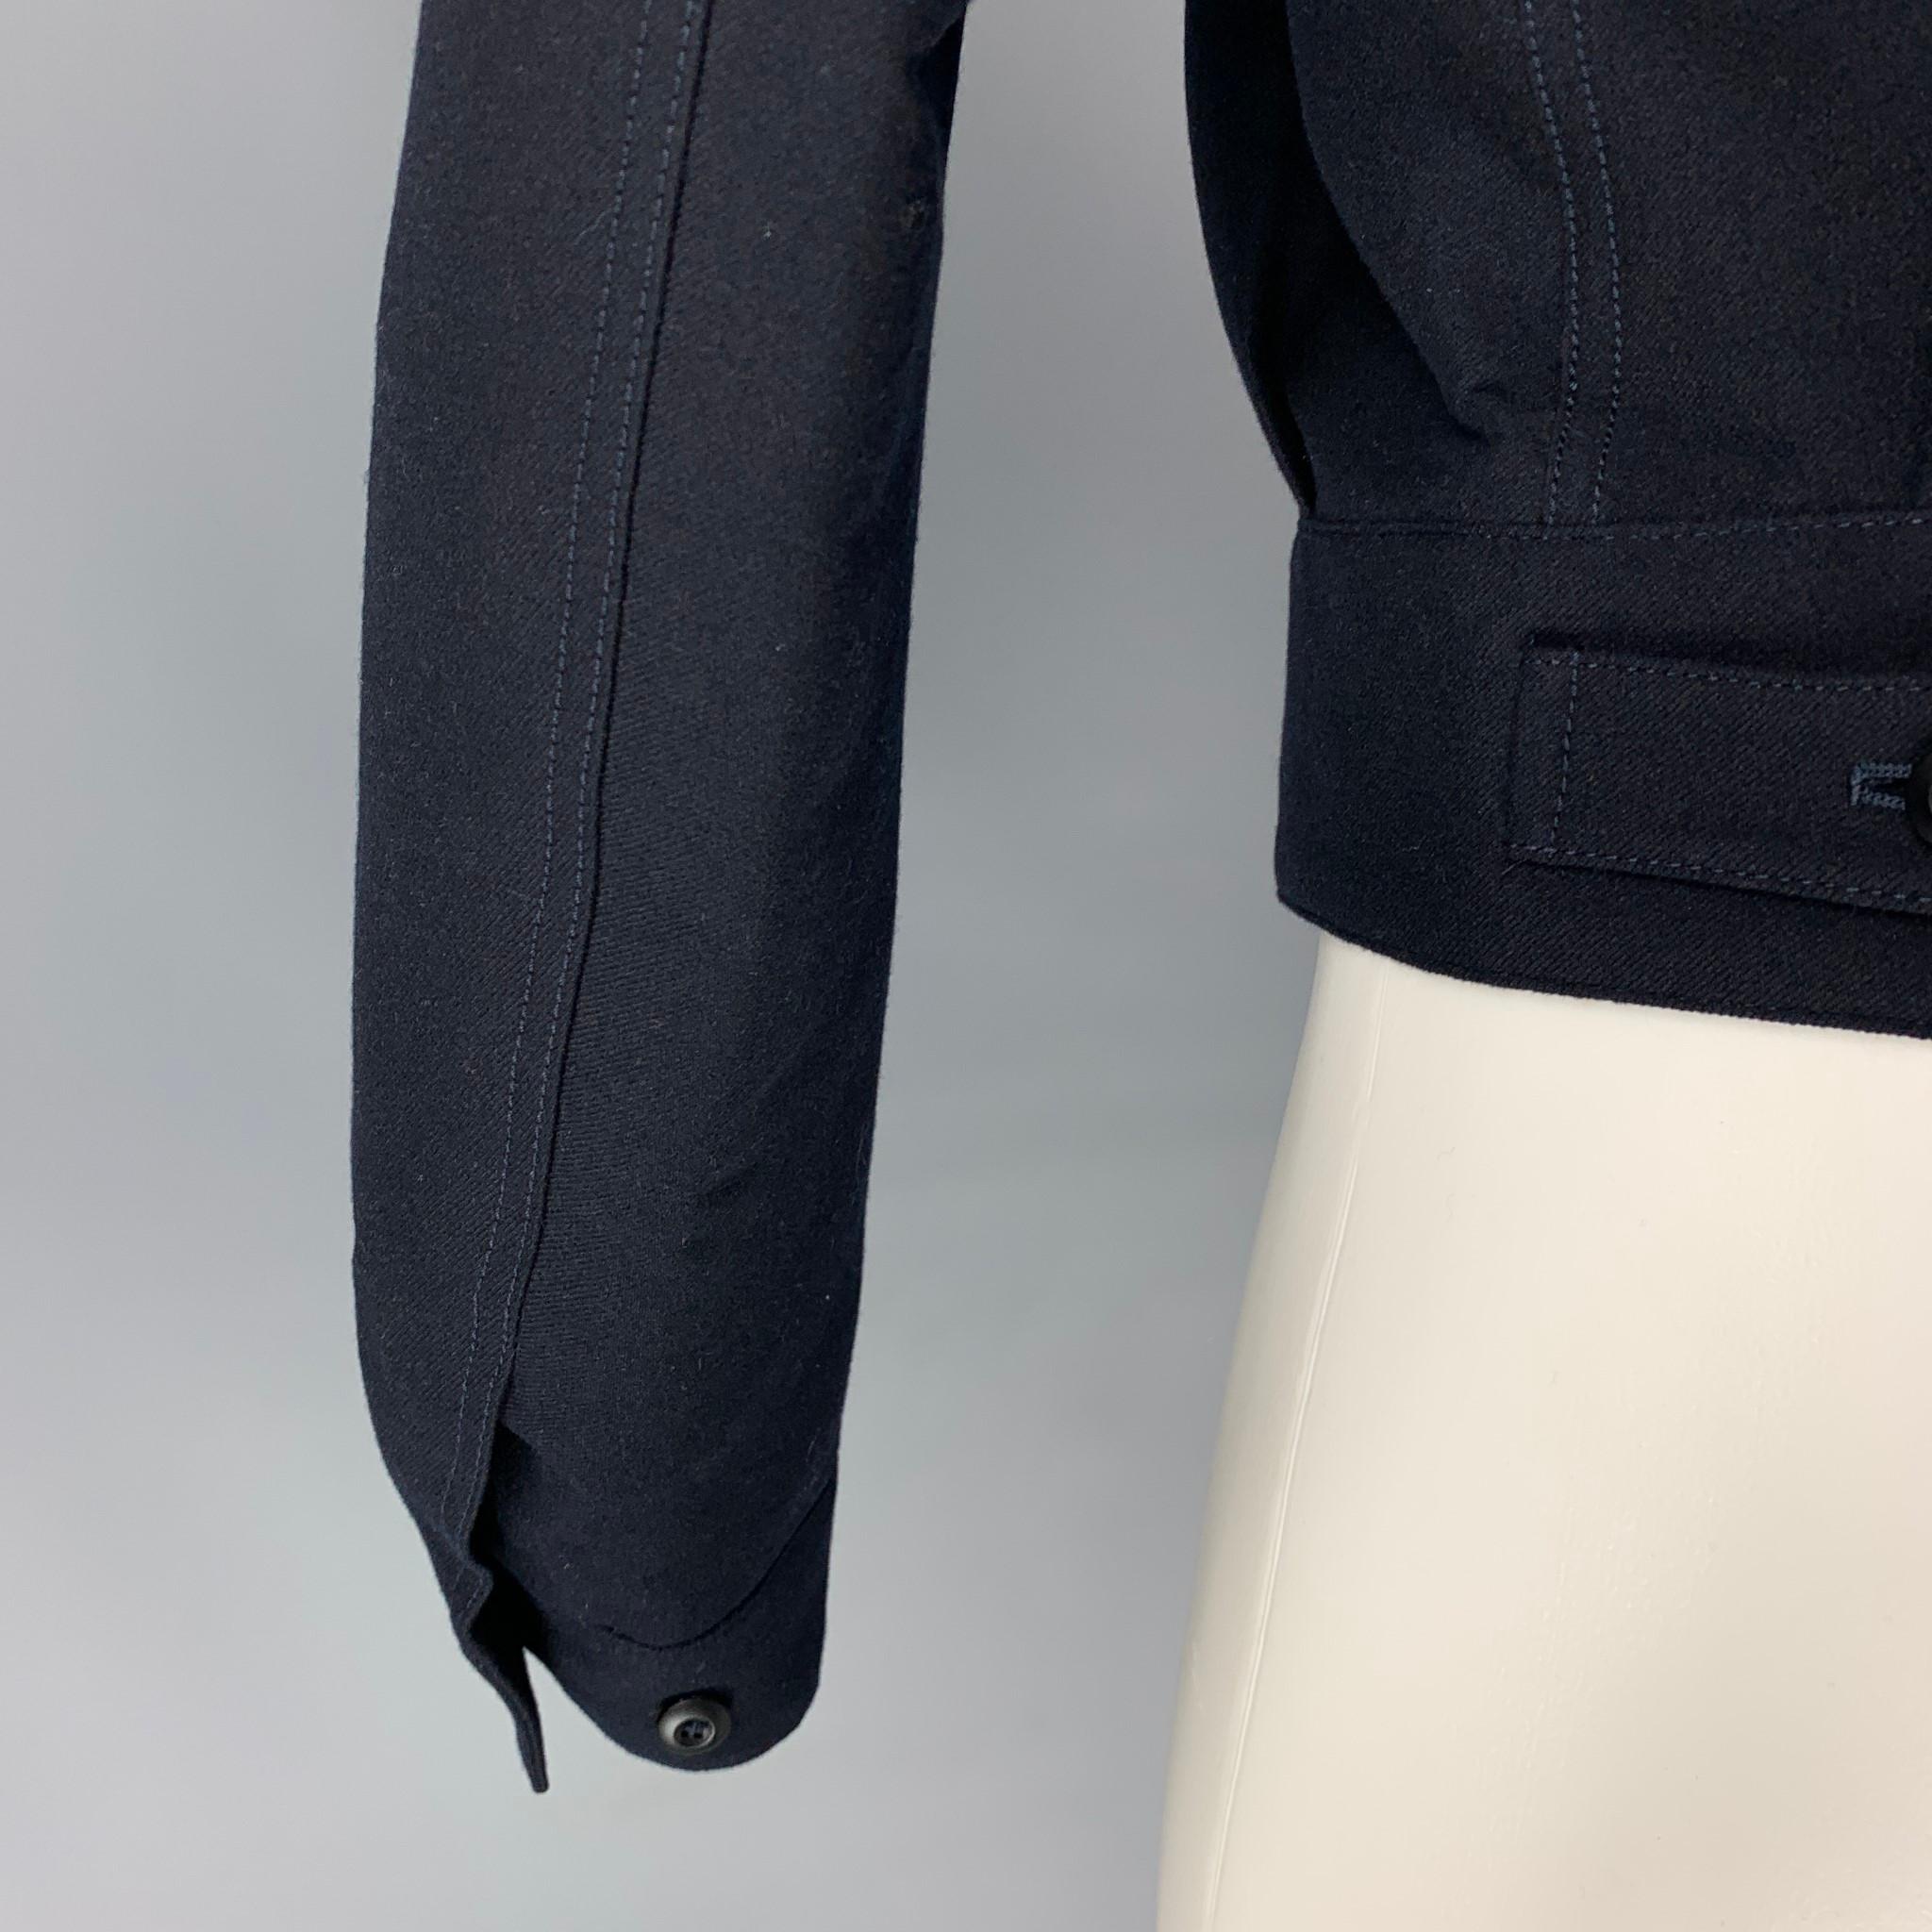 Men's BURBERRY PRORSUM Spring 2015 Size 38 Navy Blue Cashmere Blend Jacket